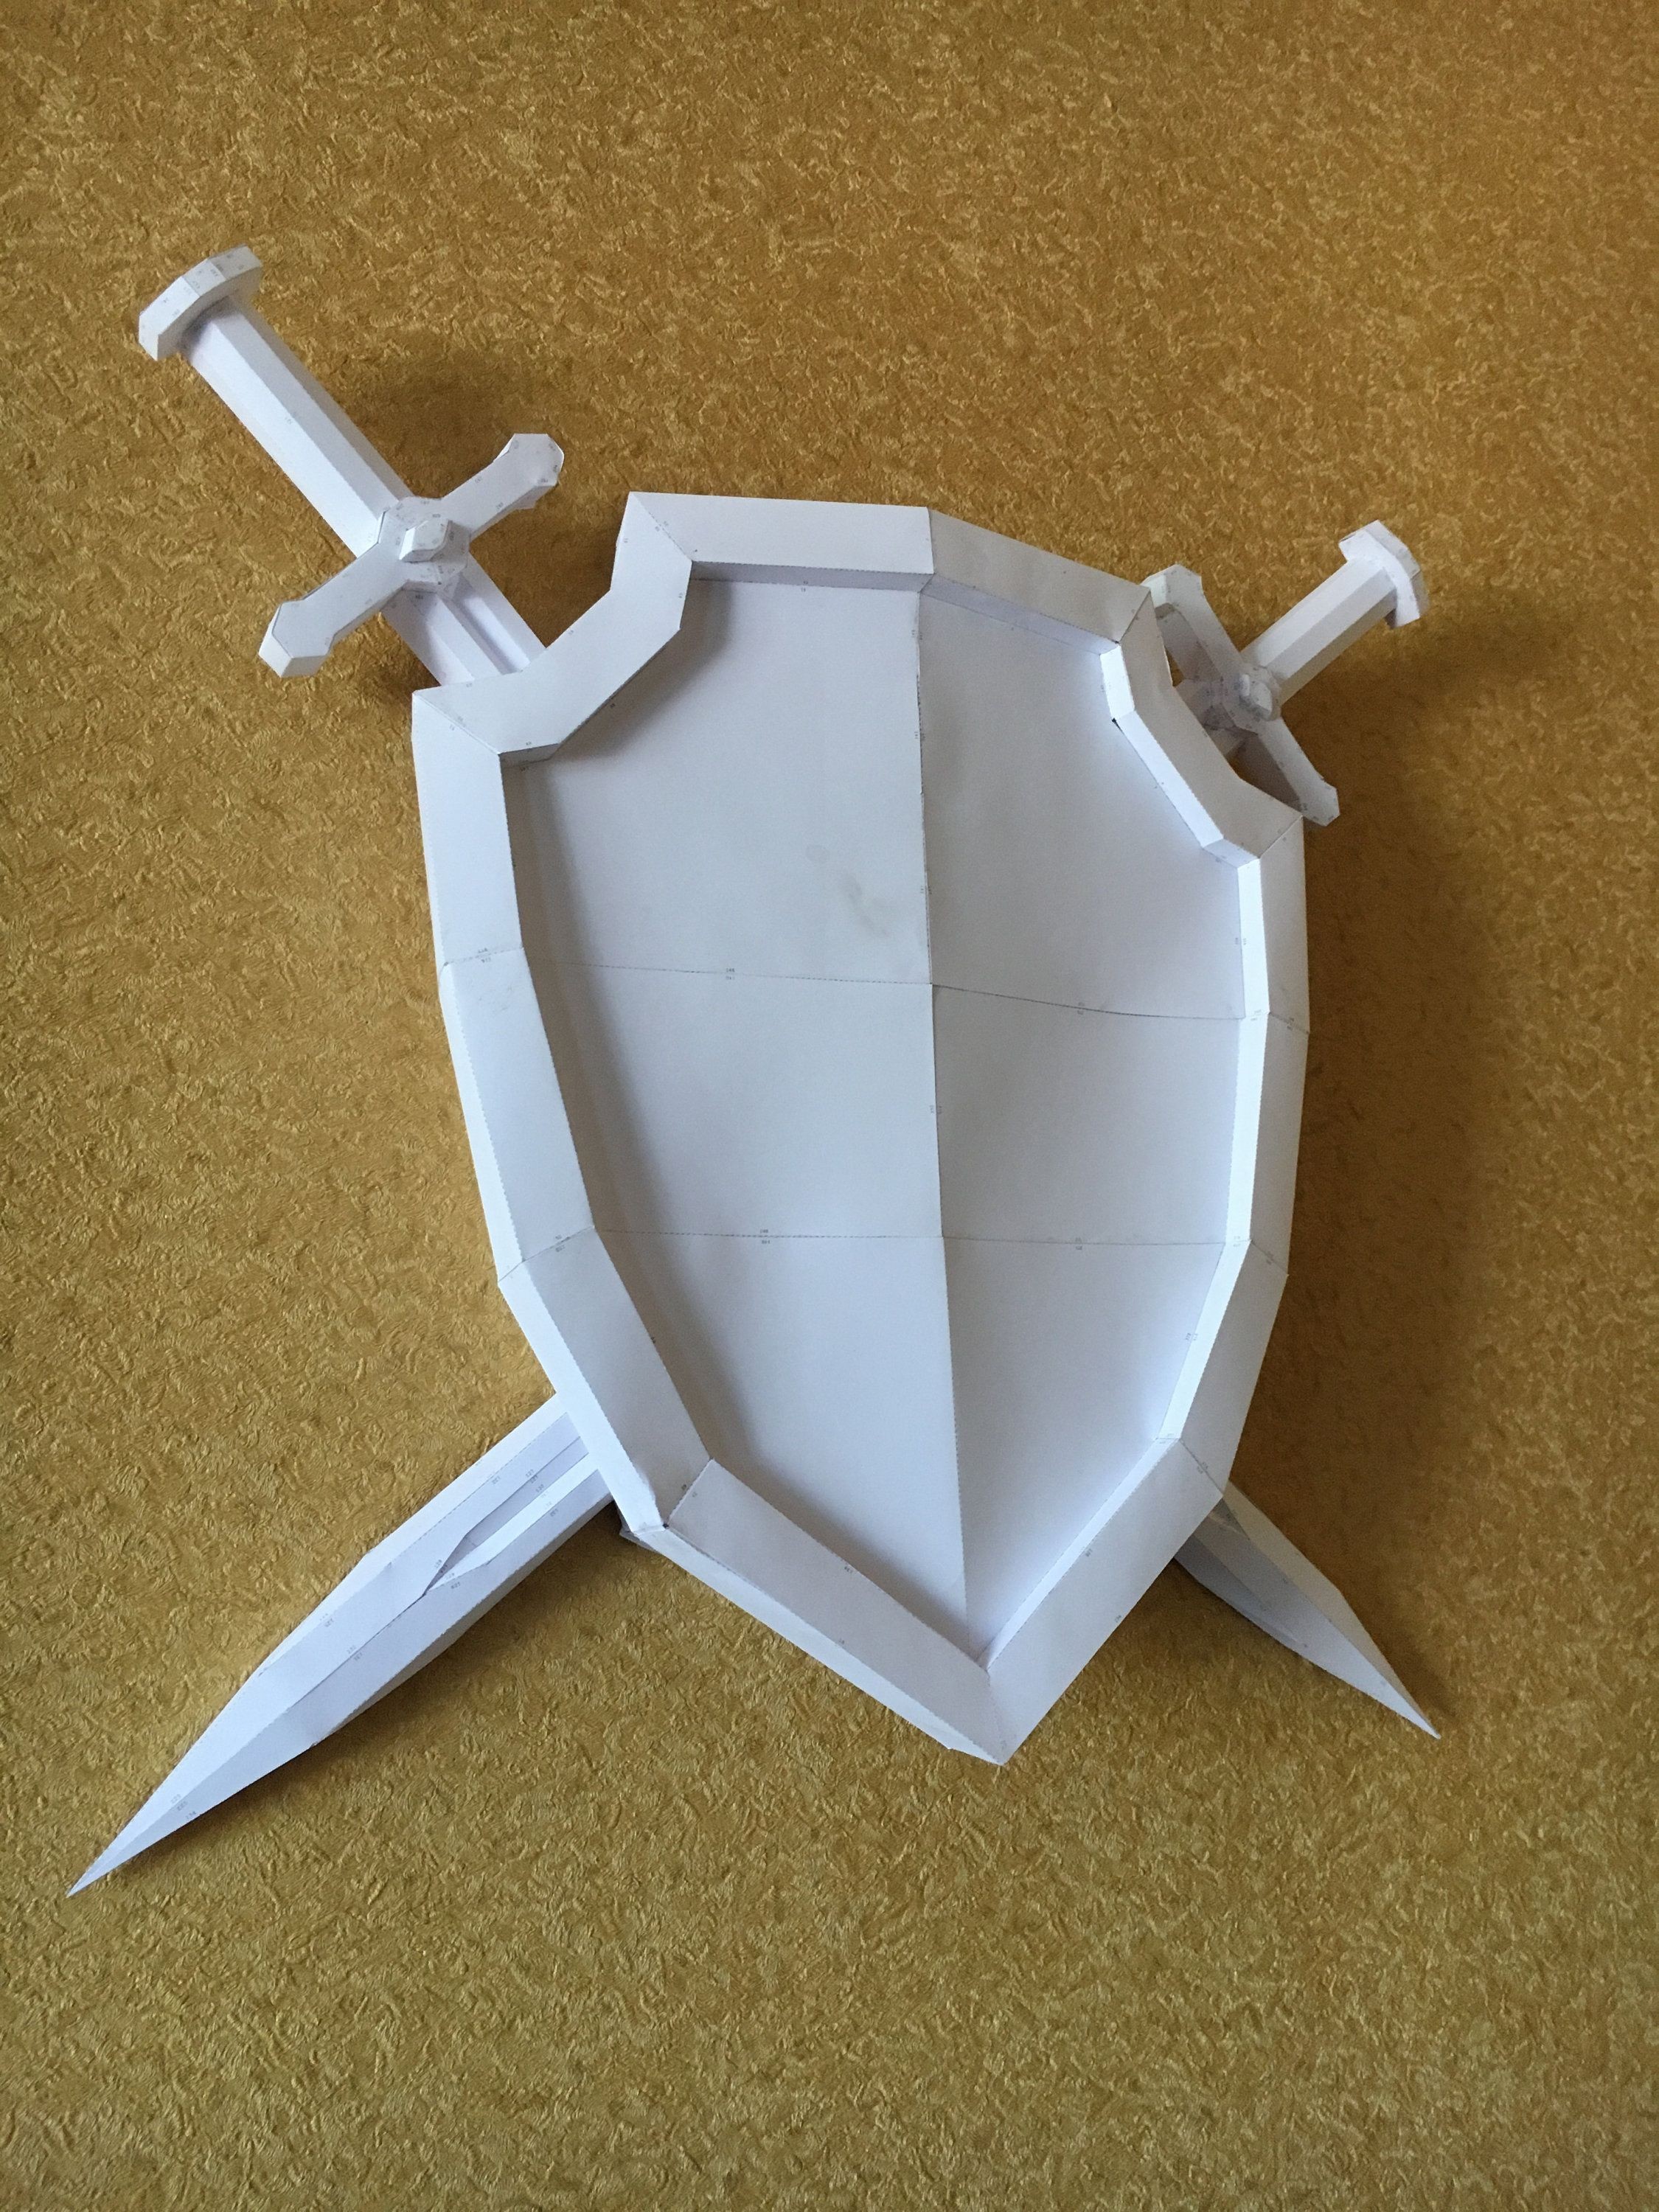 Dragon Papercraft Sword Shield Diy Papercraft Model ÐÑÐ¼Ð°Ð¶Ð½ÑÐµ Ð¸Ð·Ð´ÐµÐ Ð¸Ñ